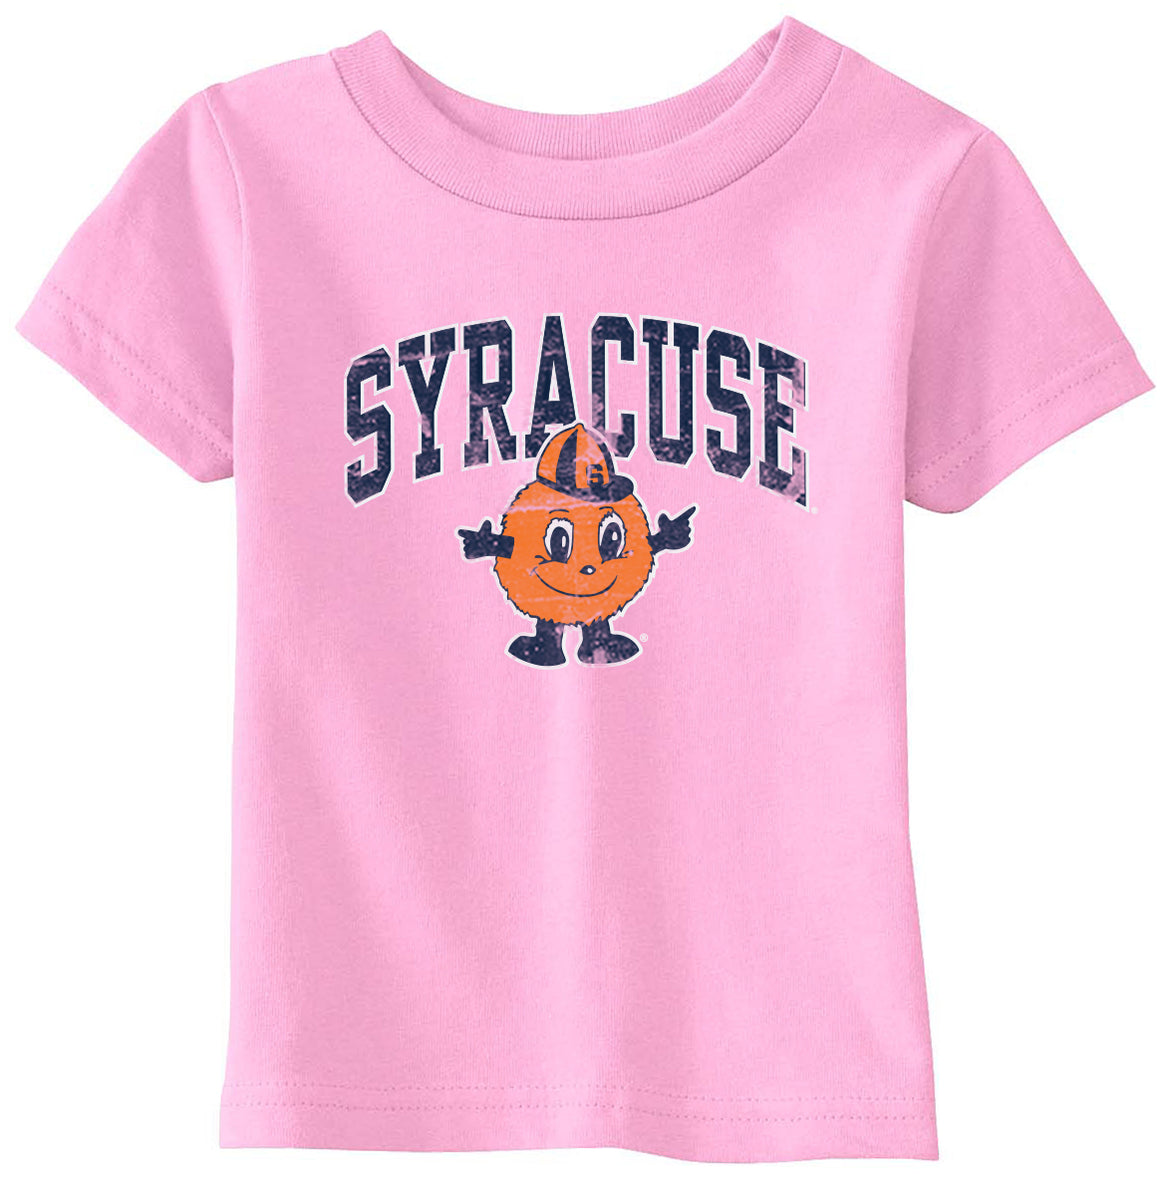 The – Distressed Syracuse Shop Kids Manny\'s Otto Original - Tee Team Syracuse